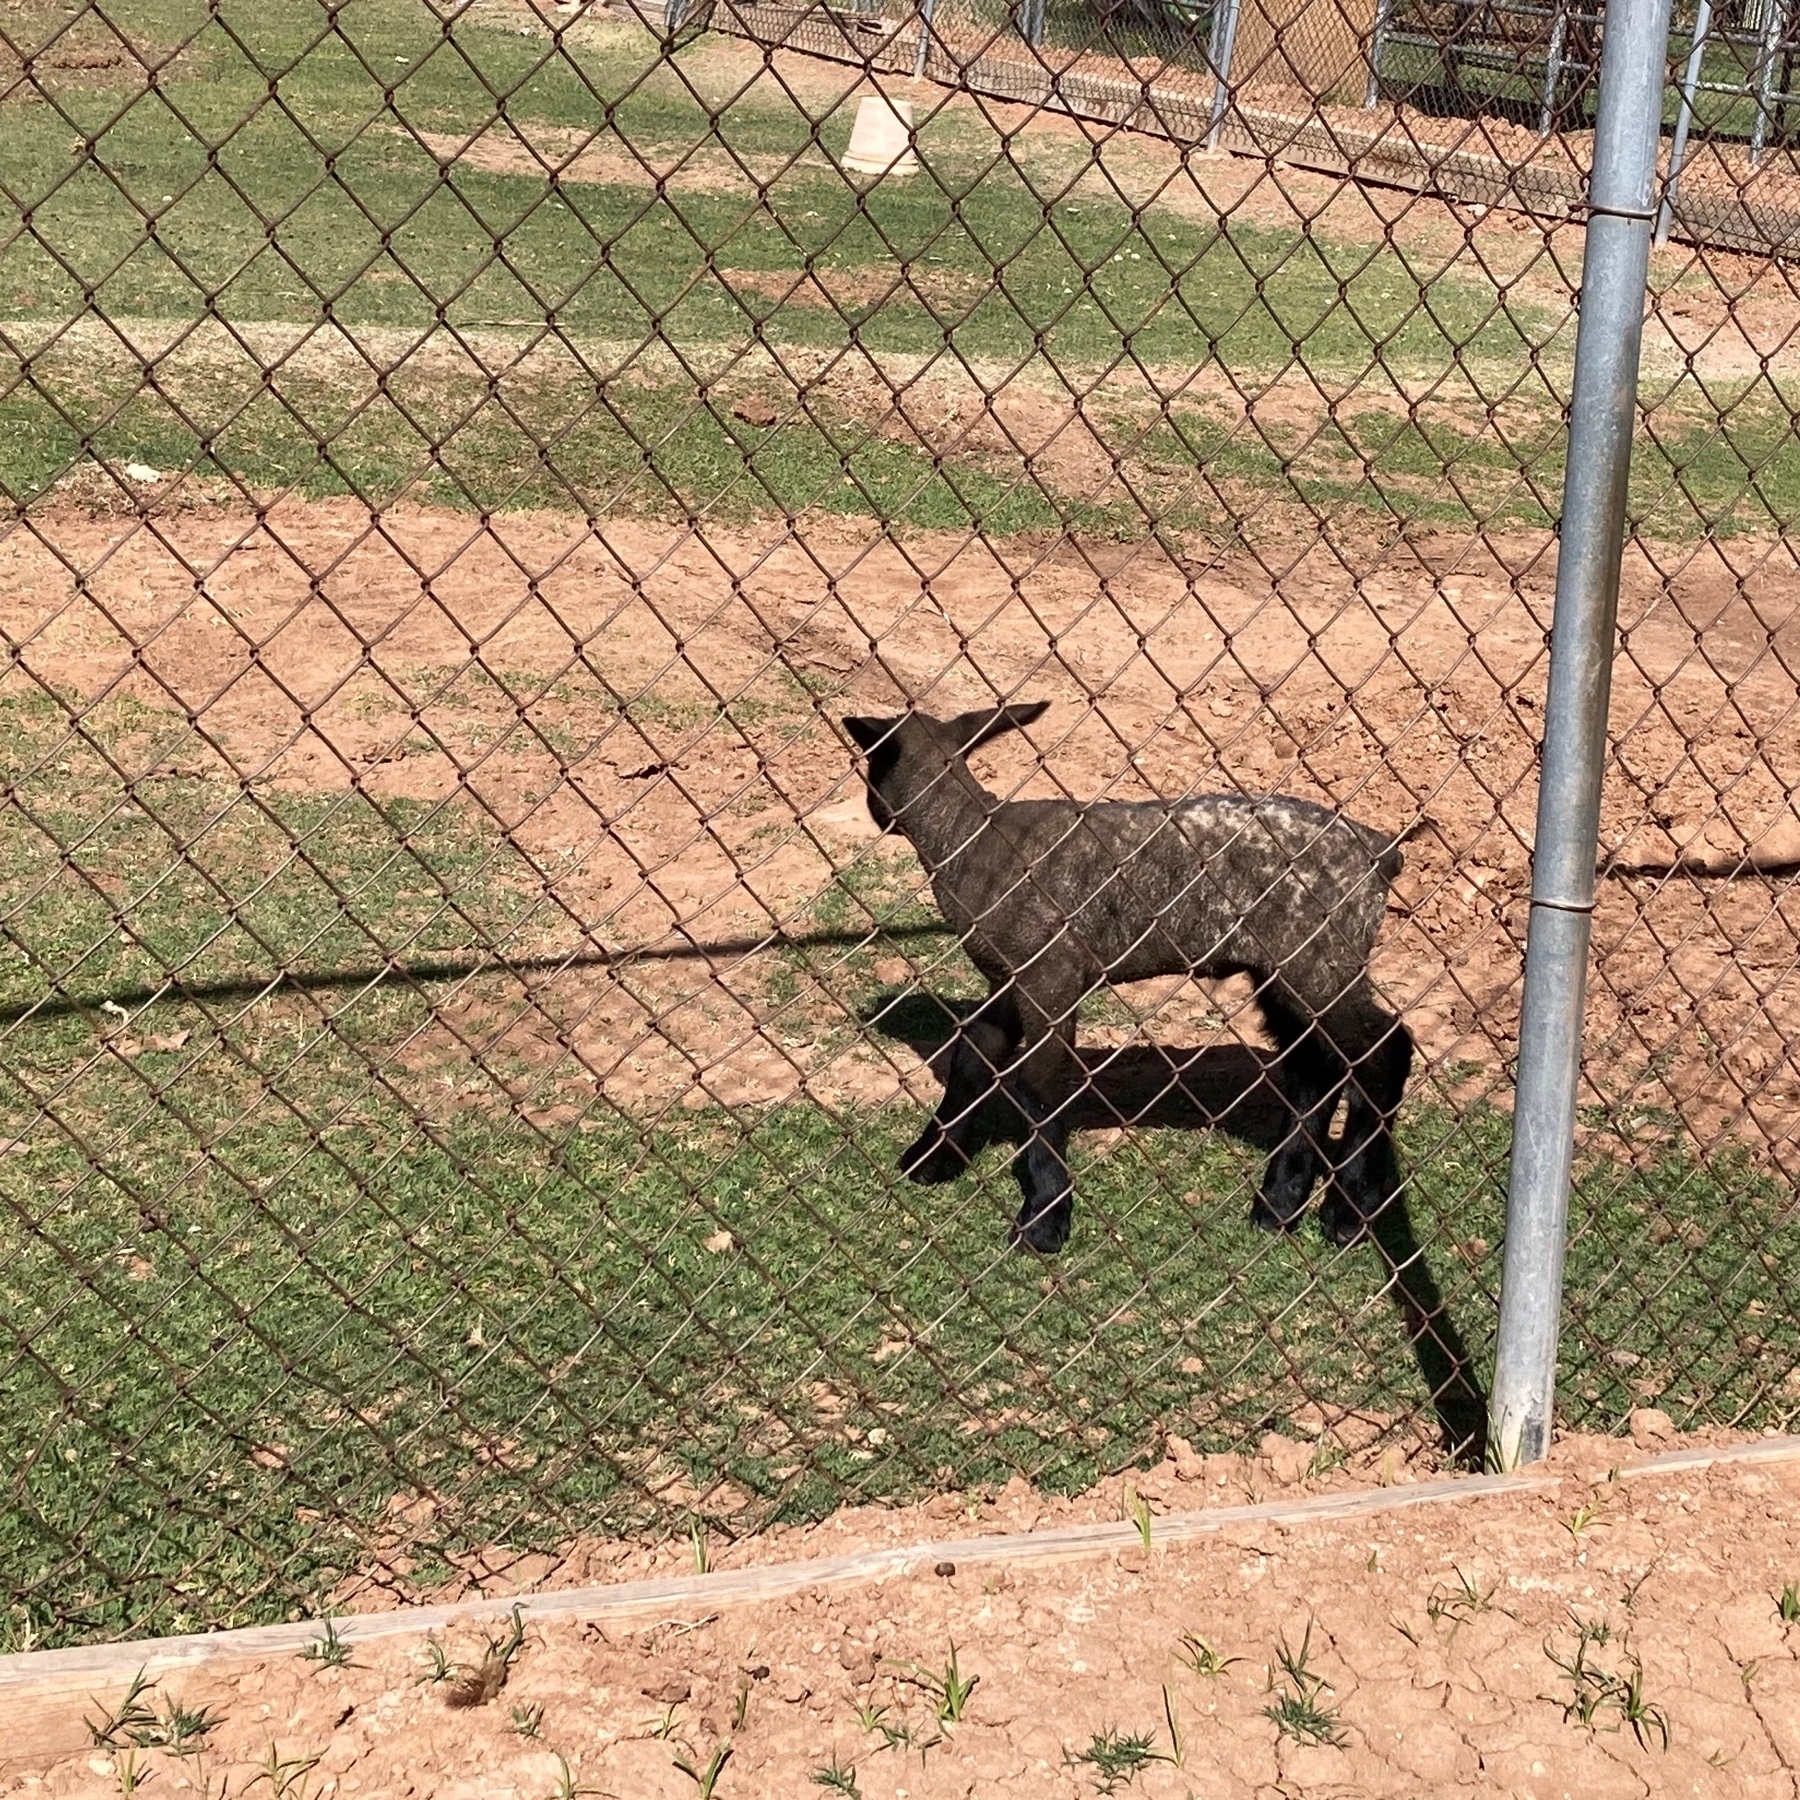 black lamb behind a fence